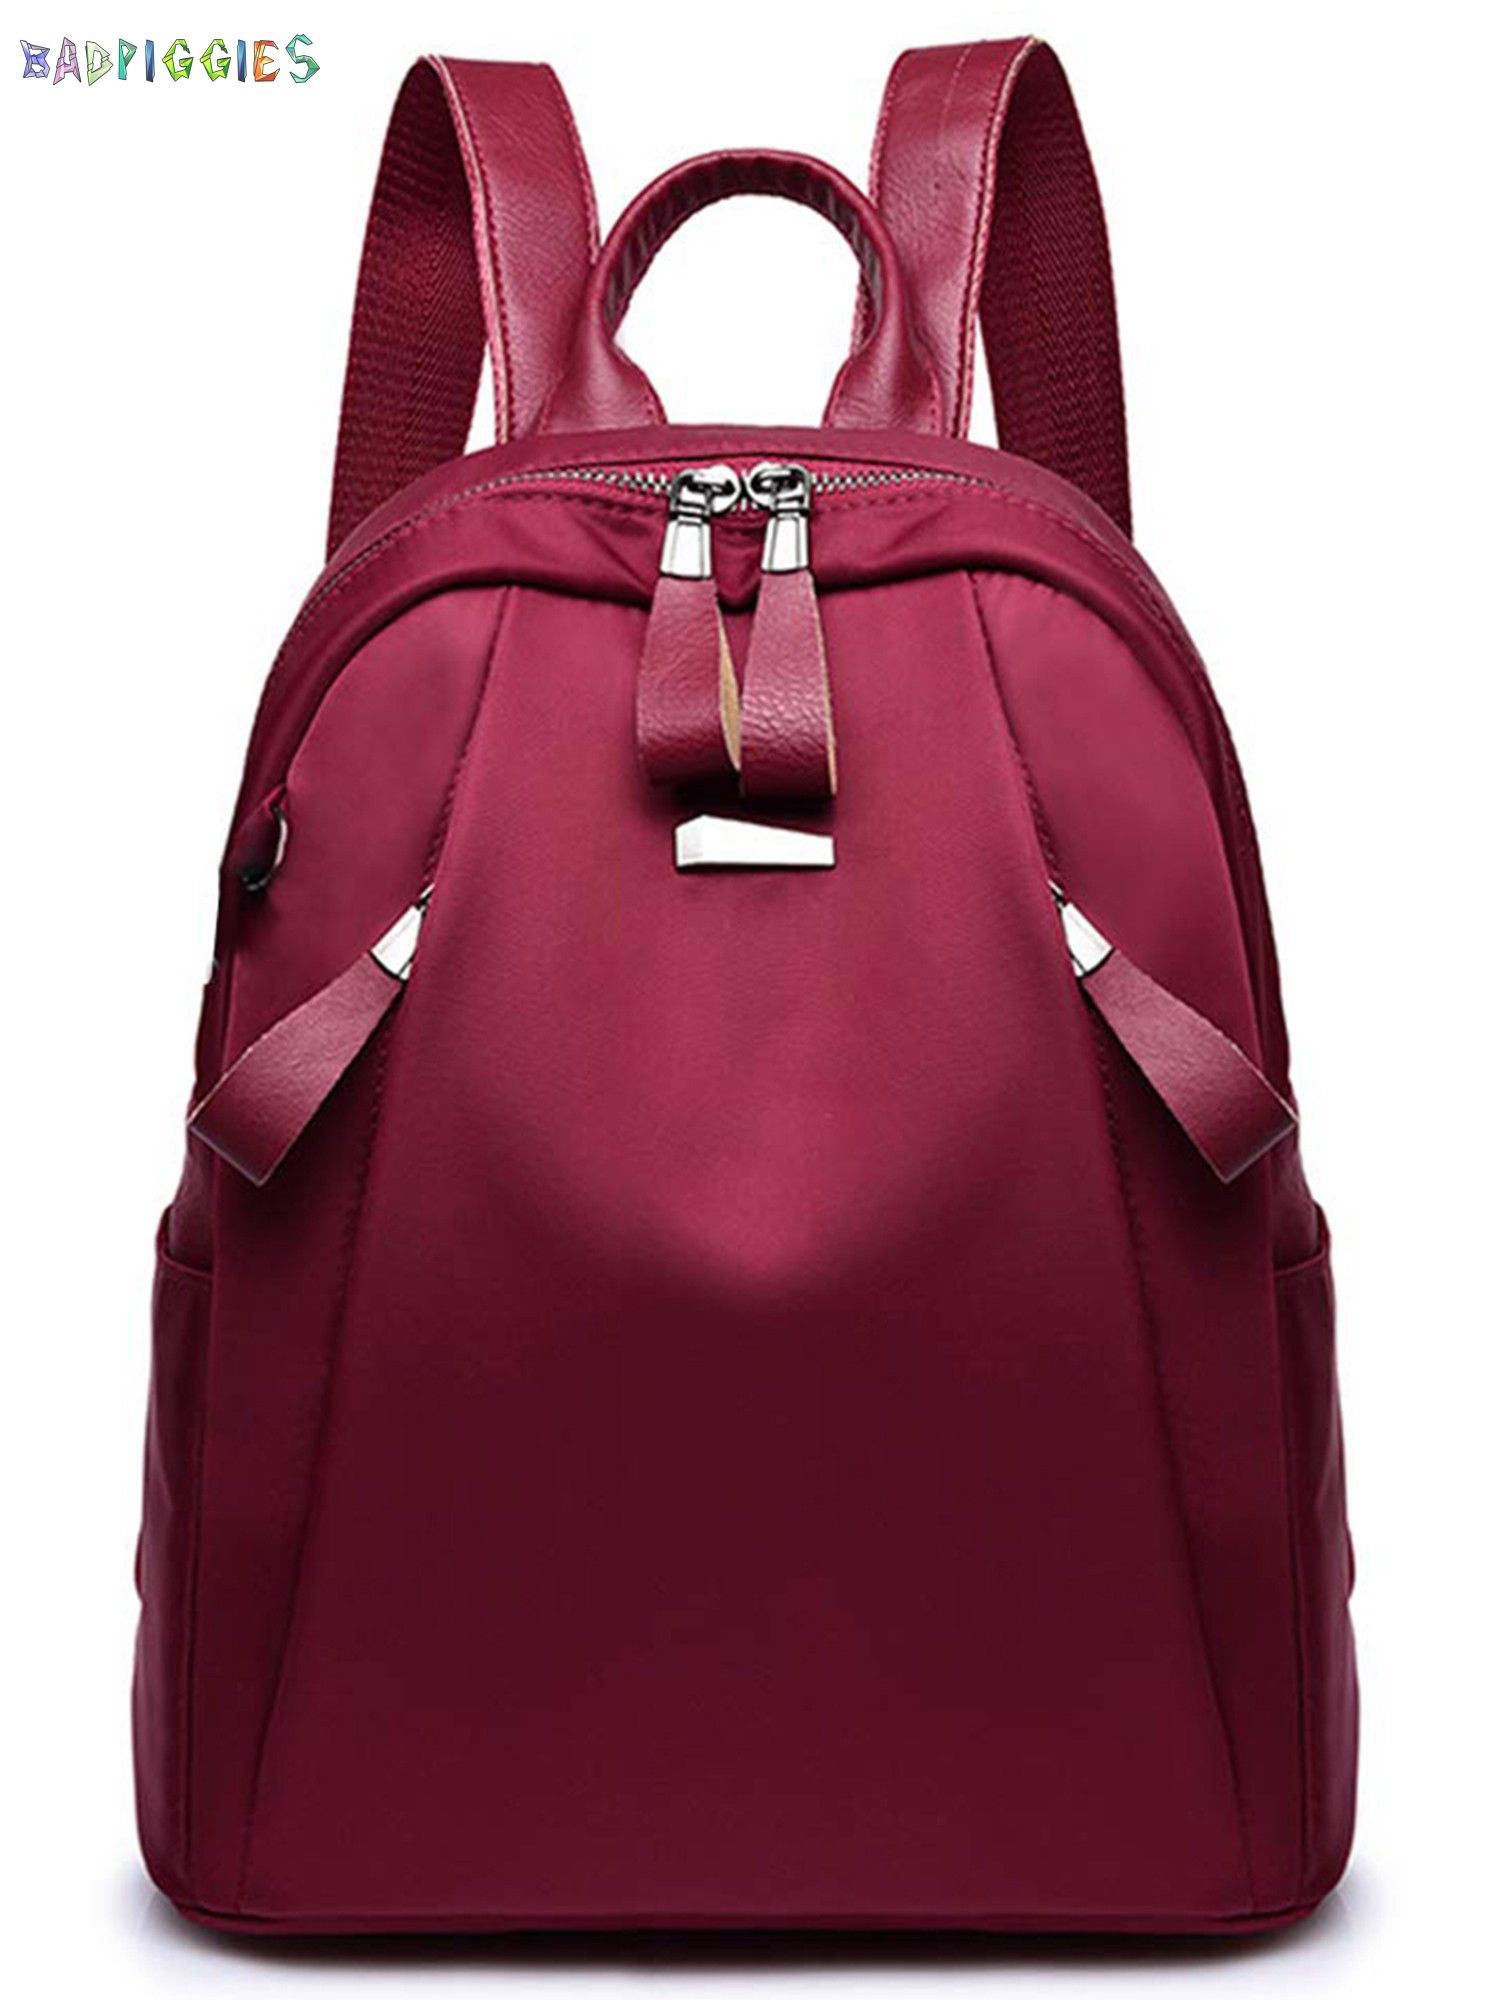 BadPiggies Women Backpack Waterproof Oxford Handbag Shoulder Travel Bag School Bag Anti-theft Rucksack - image 1 of 11